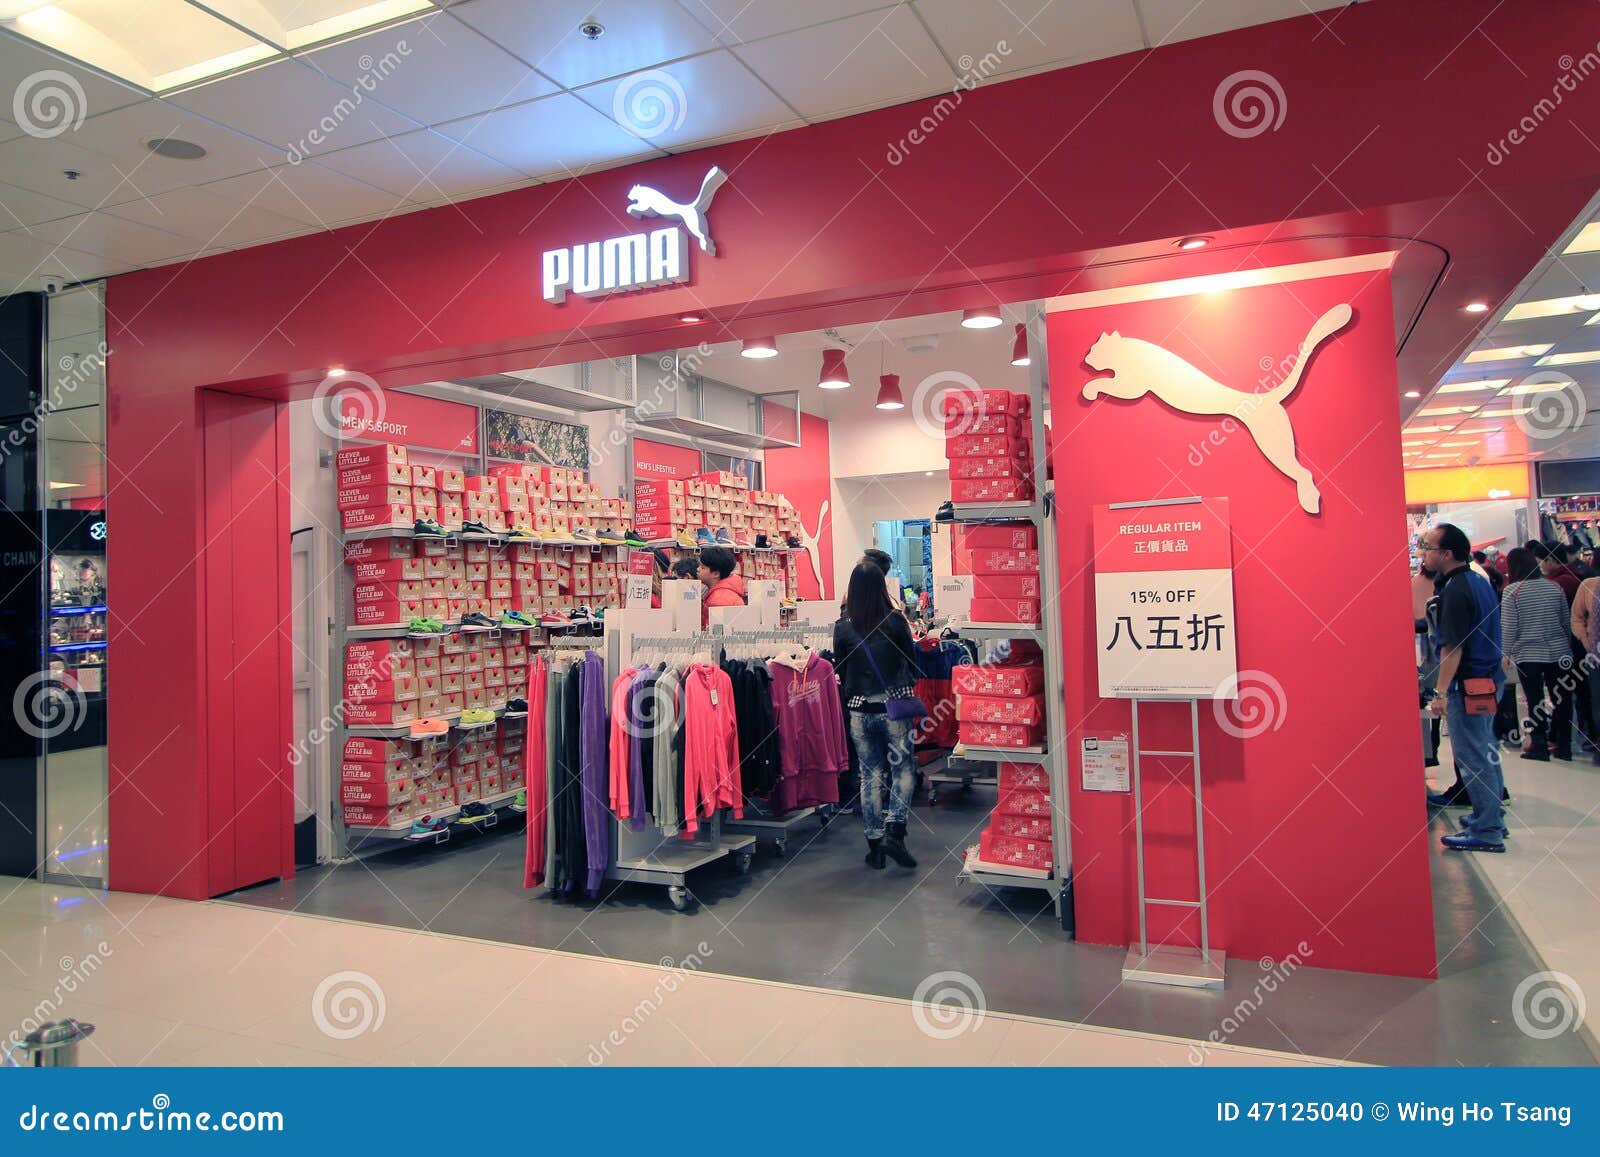 puma outlet mall - 65% OFF - tajpalace.net